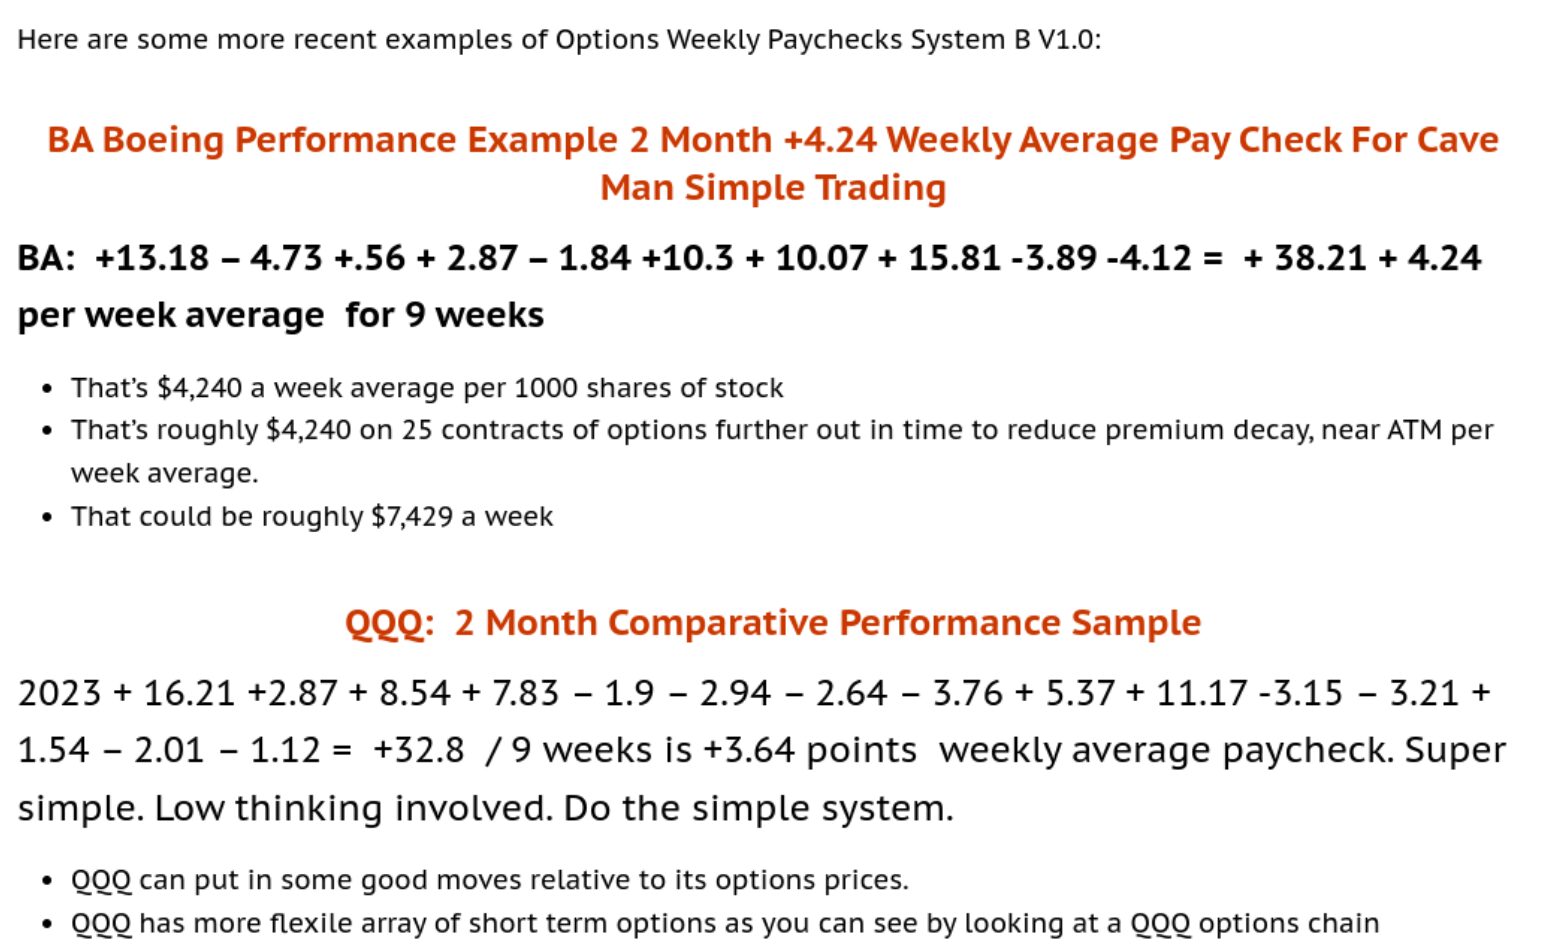 Options Weekly Paychecks Systems B V1.0 - The Original Simple Powerhouse 12